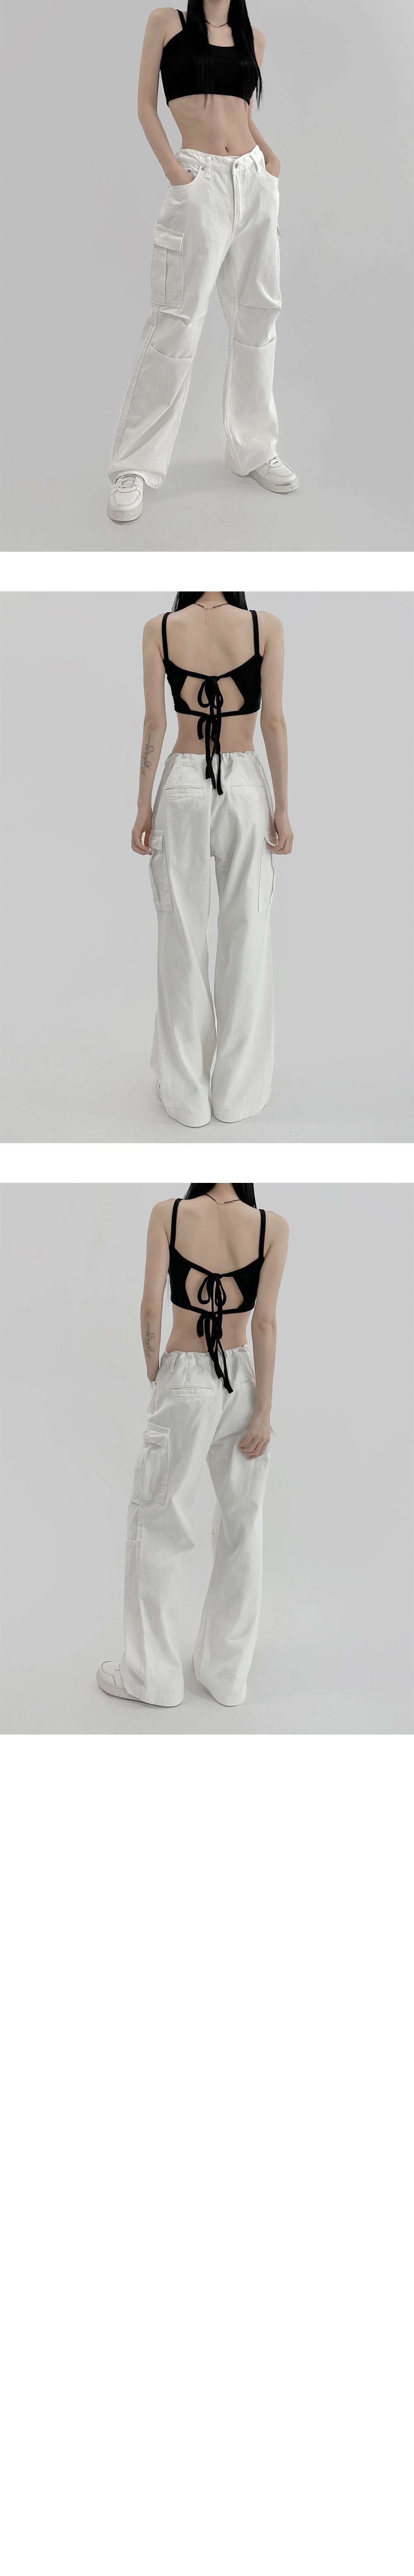 suspenders skirt/pants model image-S1L32